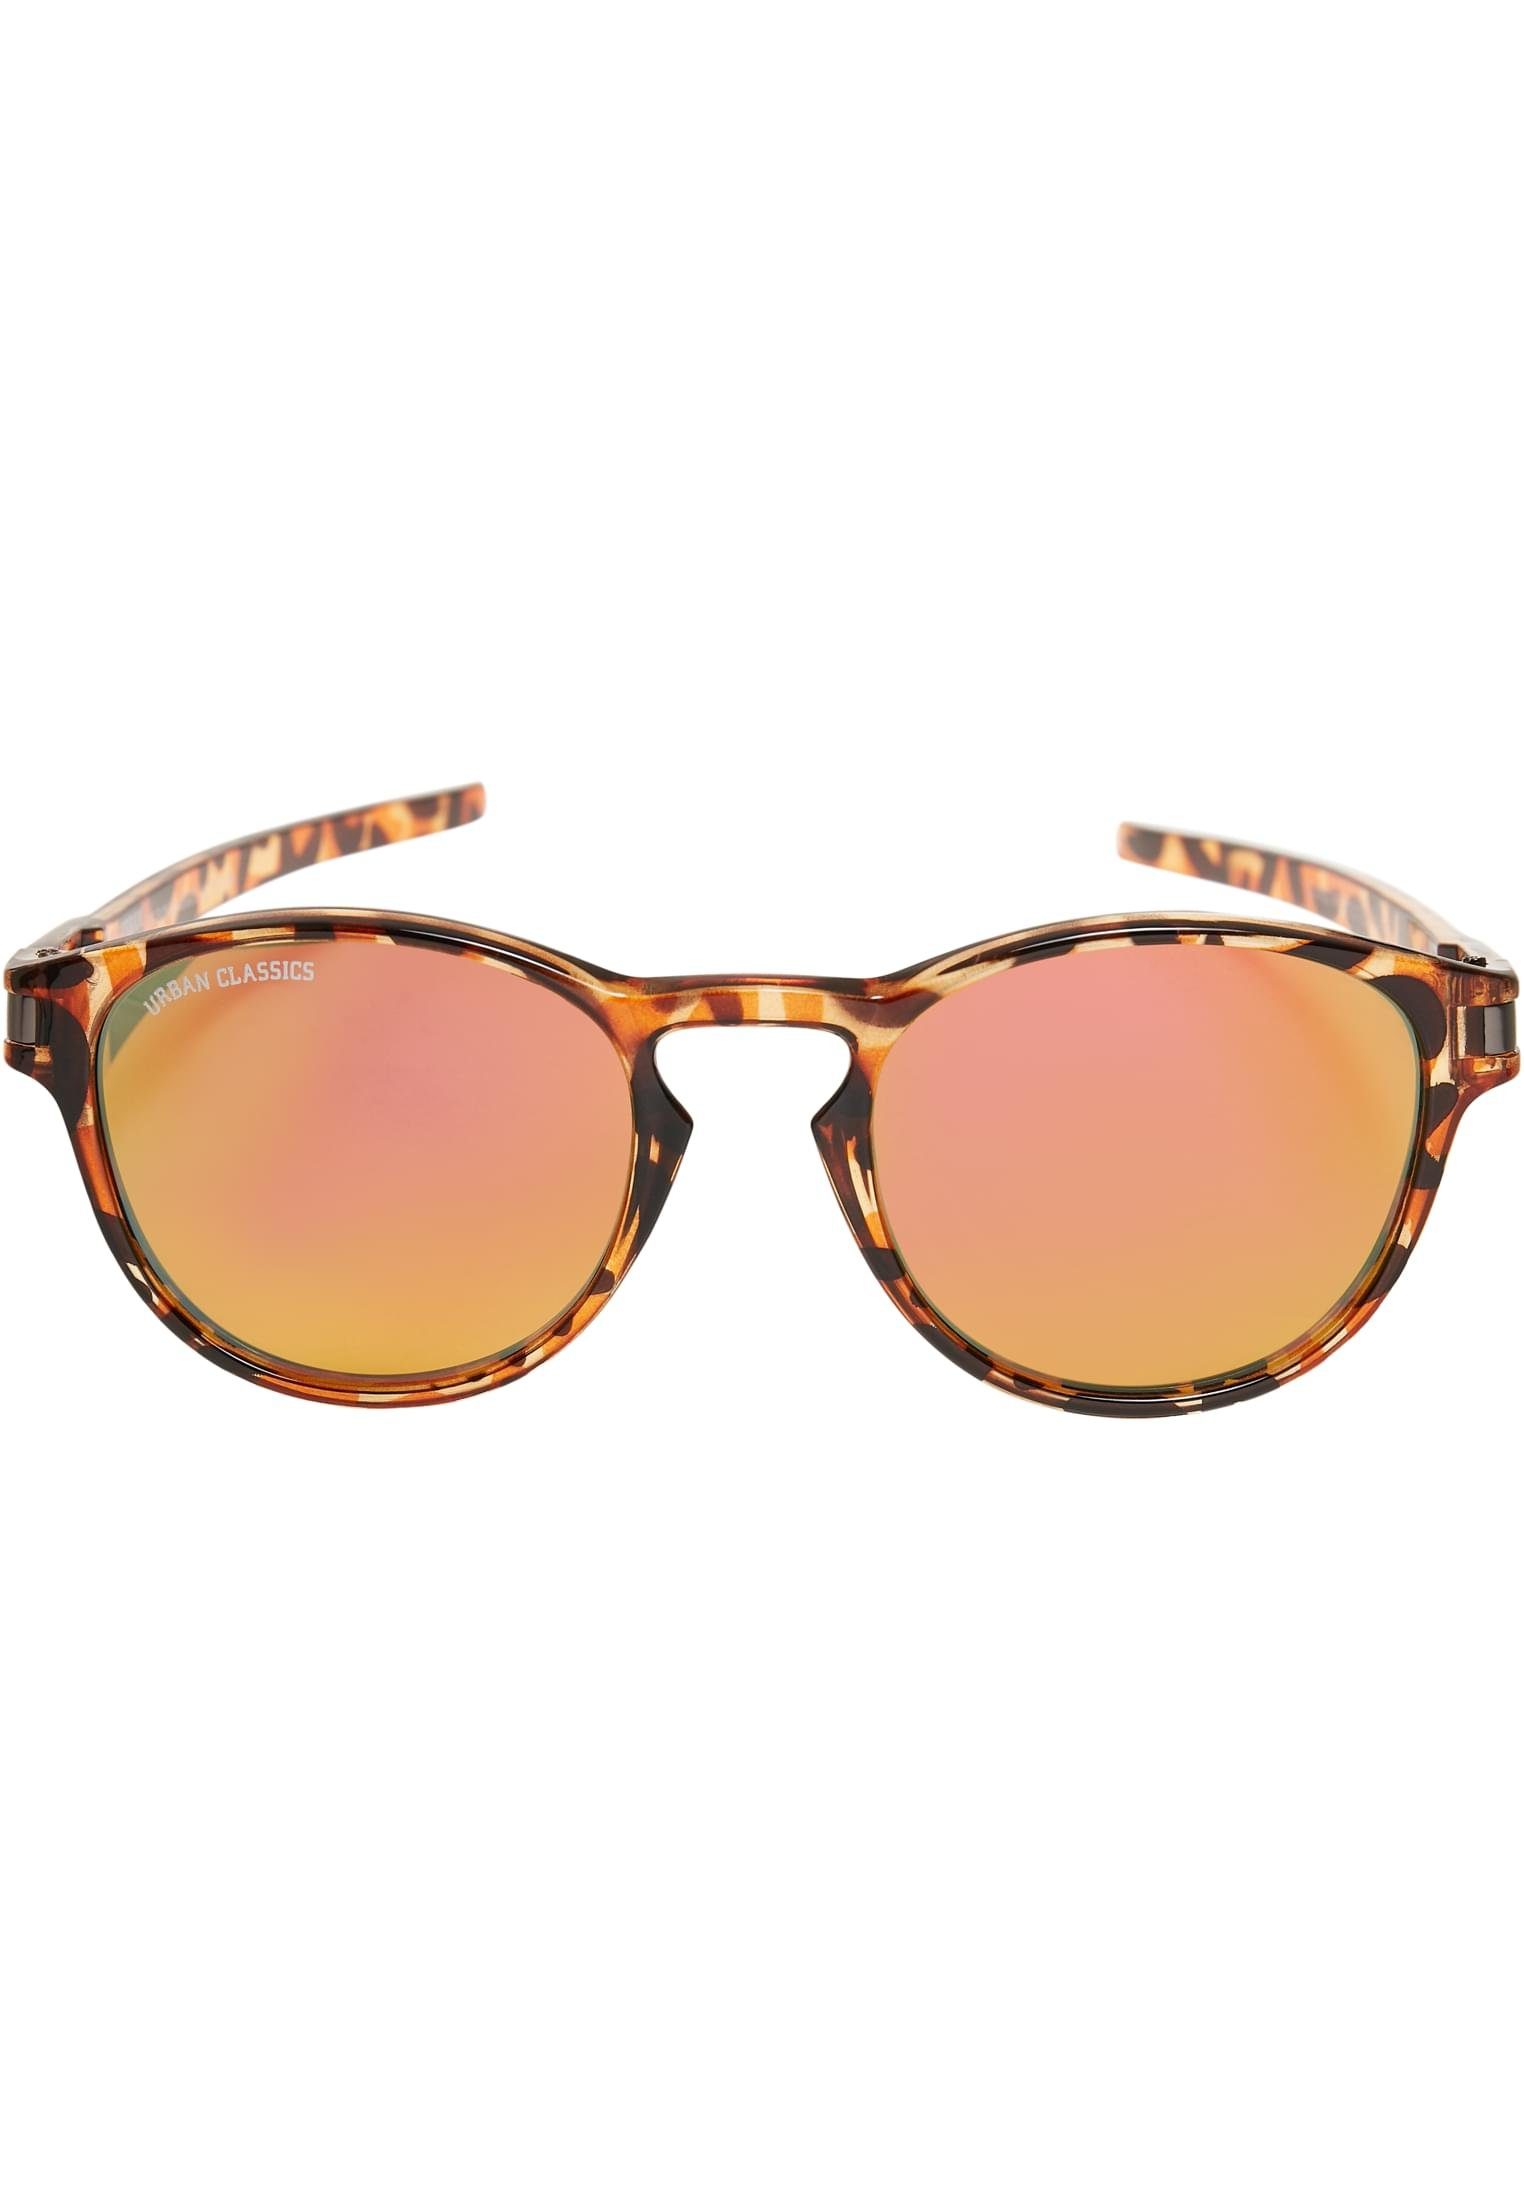 Accessoires leo/orange Sunglasses CLASSICS URBAN 106 UC Sonnenbrille brown